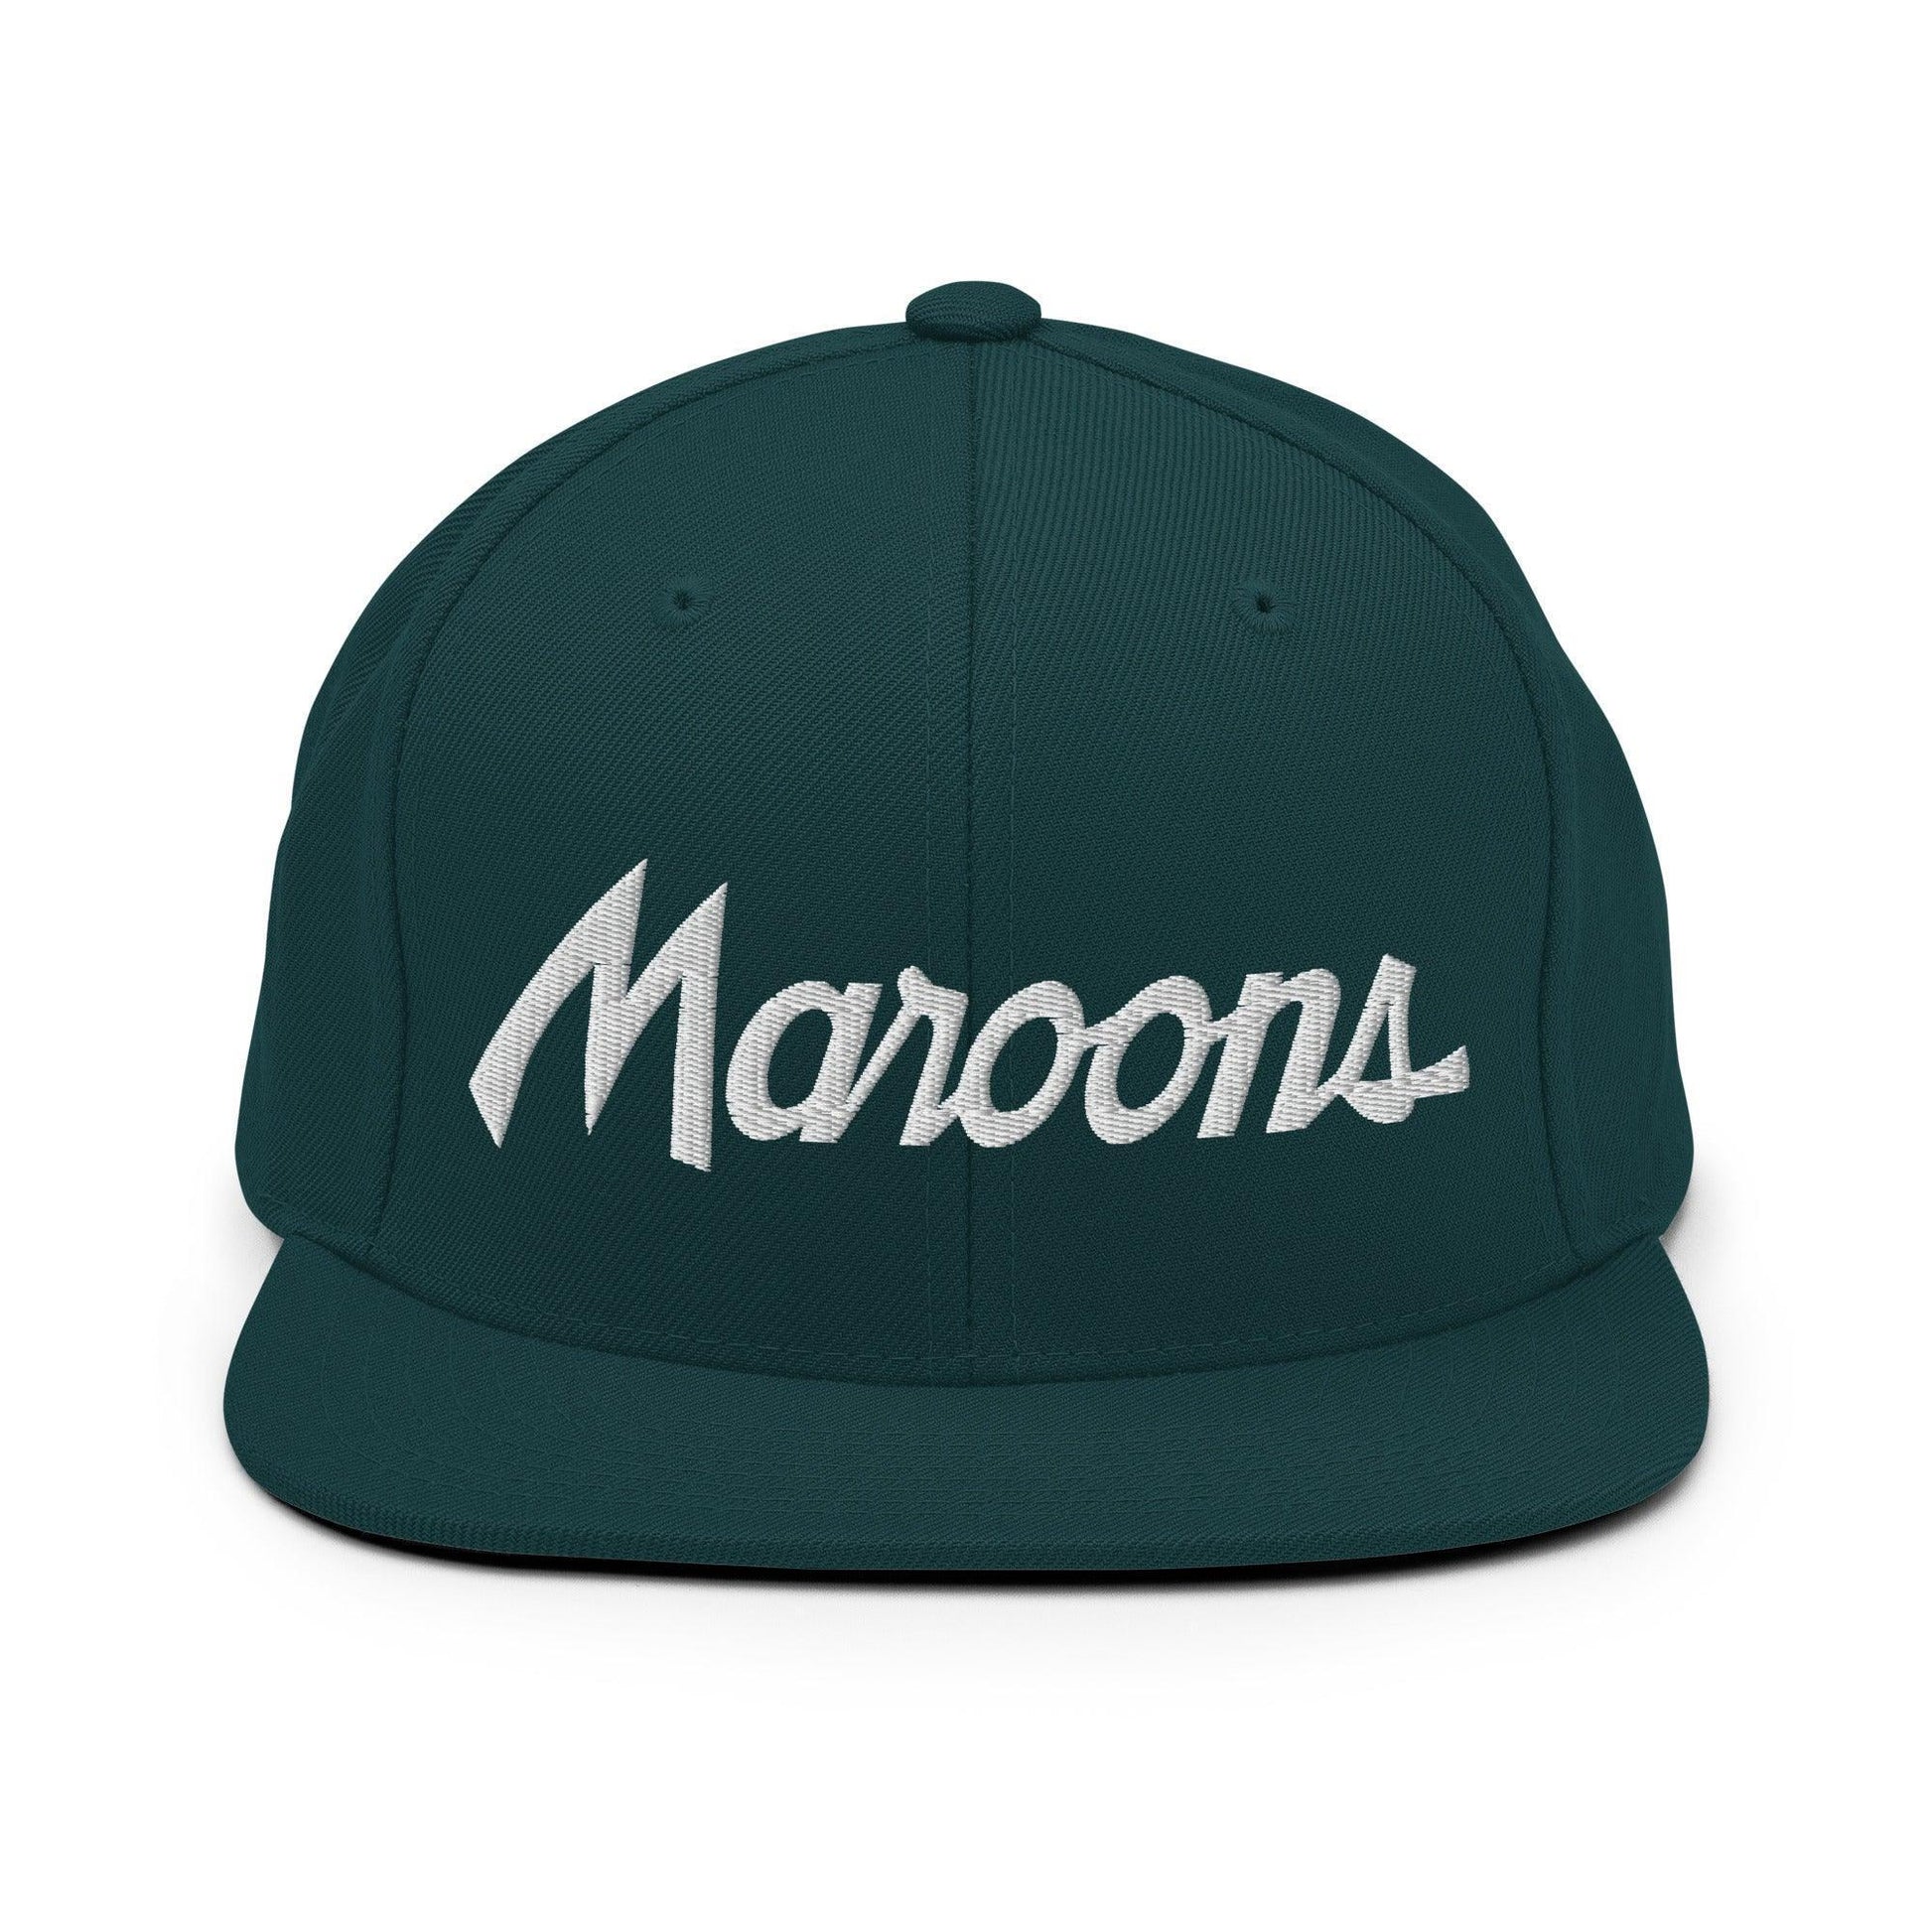 Maroons School Mascot Script Snapback Hat Spruce